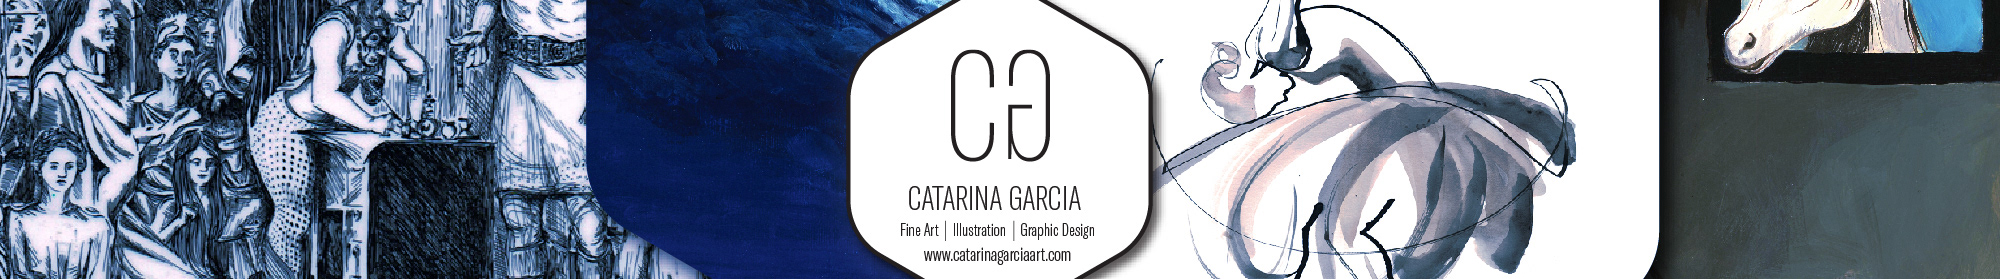 Catarina Garcia's profile banner